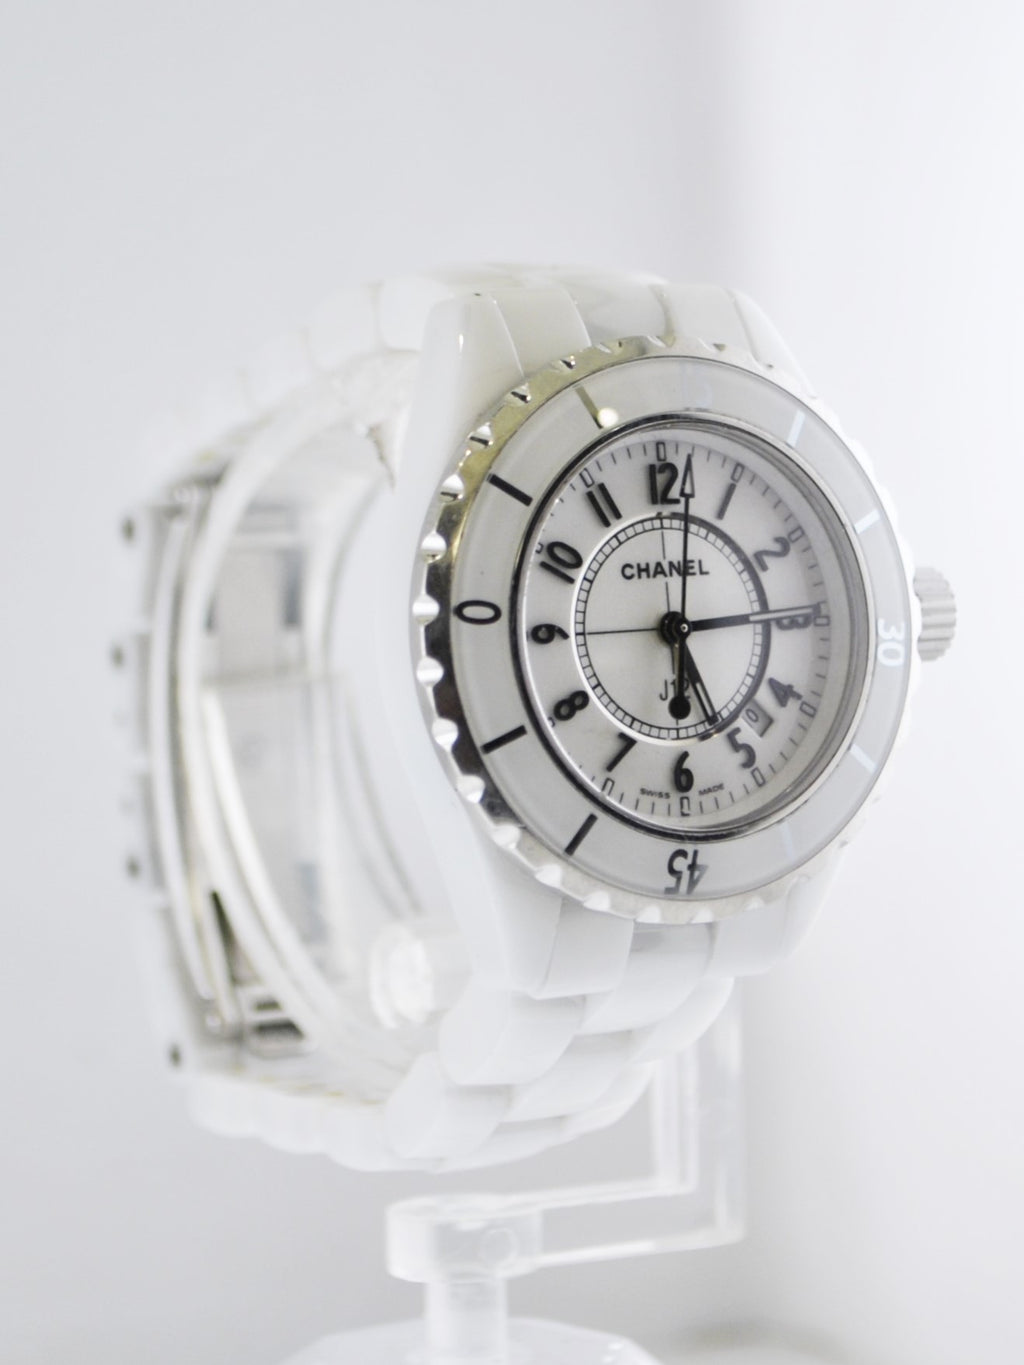 Chanel J12 Quartz Watch - 33mm White Ceramic And Steel Case - White Mother  Of Pearl Diamond Dial - White Ceramic Bracelet - H5698